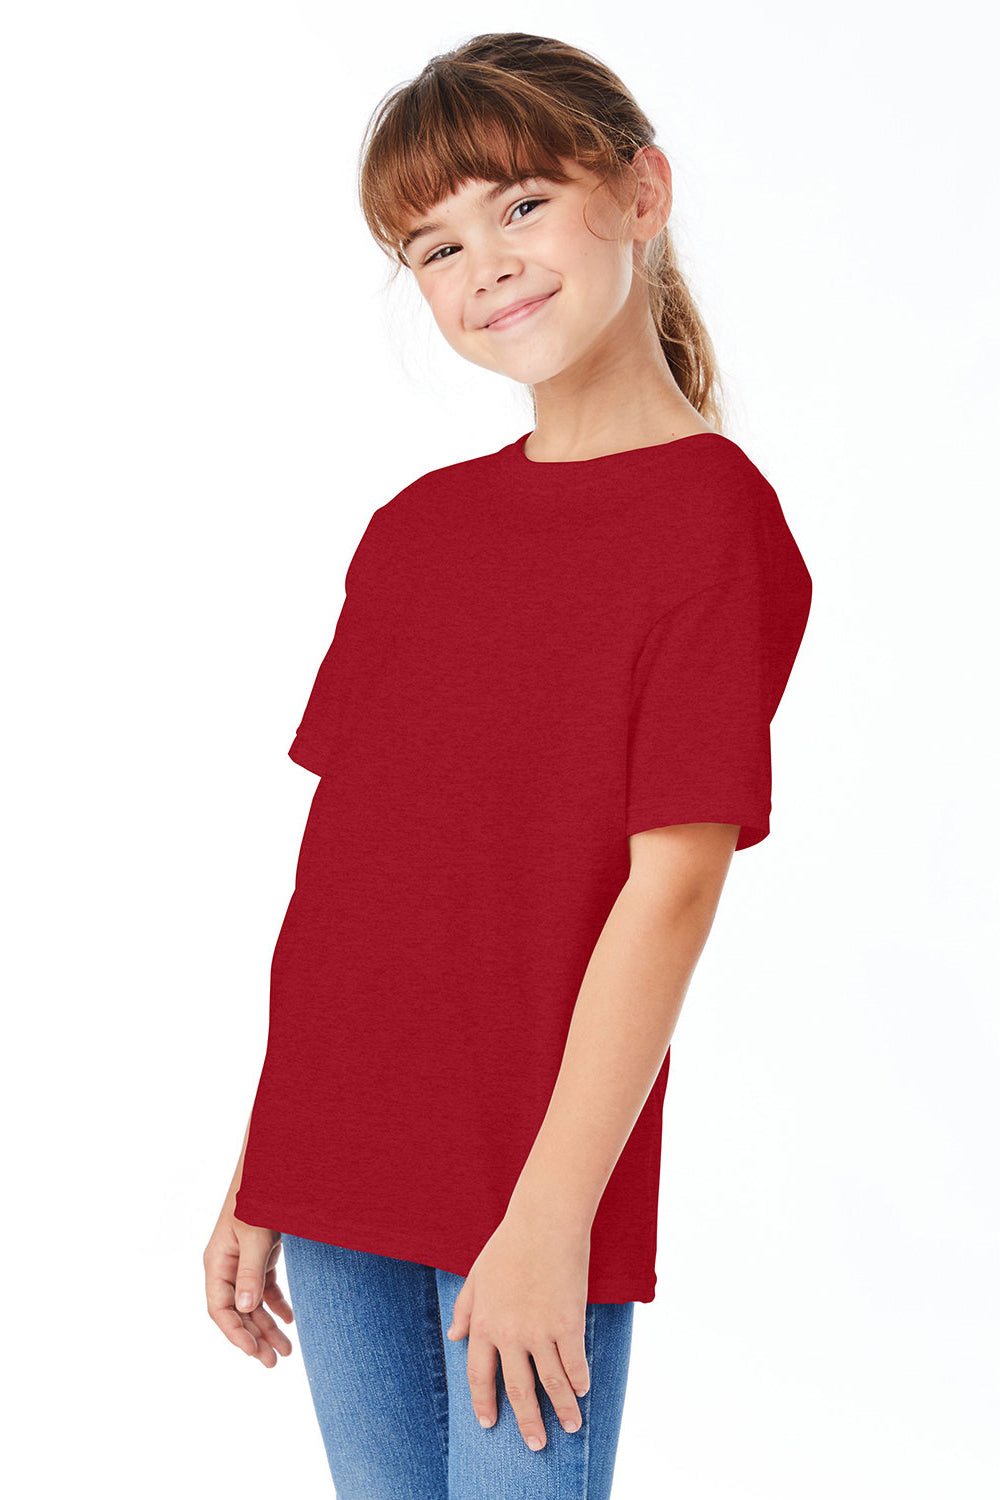 Hanes 5480 Youth ComfortSoft Short Sleeve Crewneck T-Shirt Heather Pepper Red 3Q